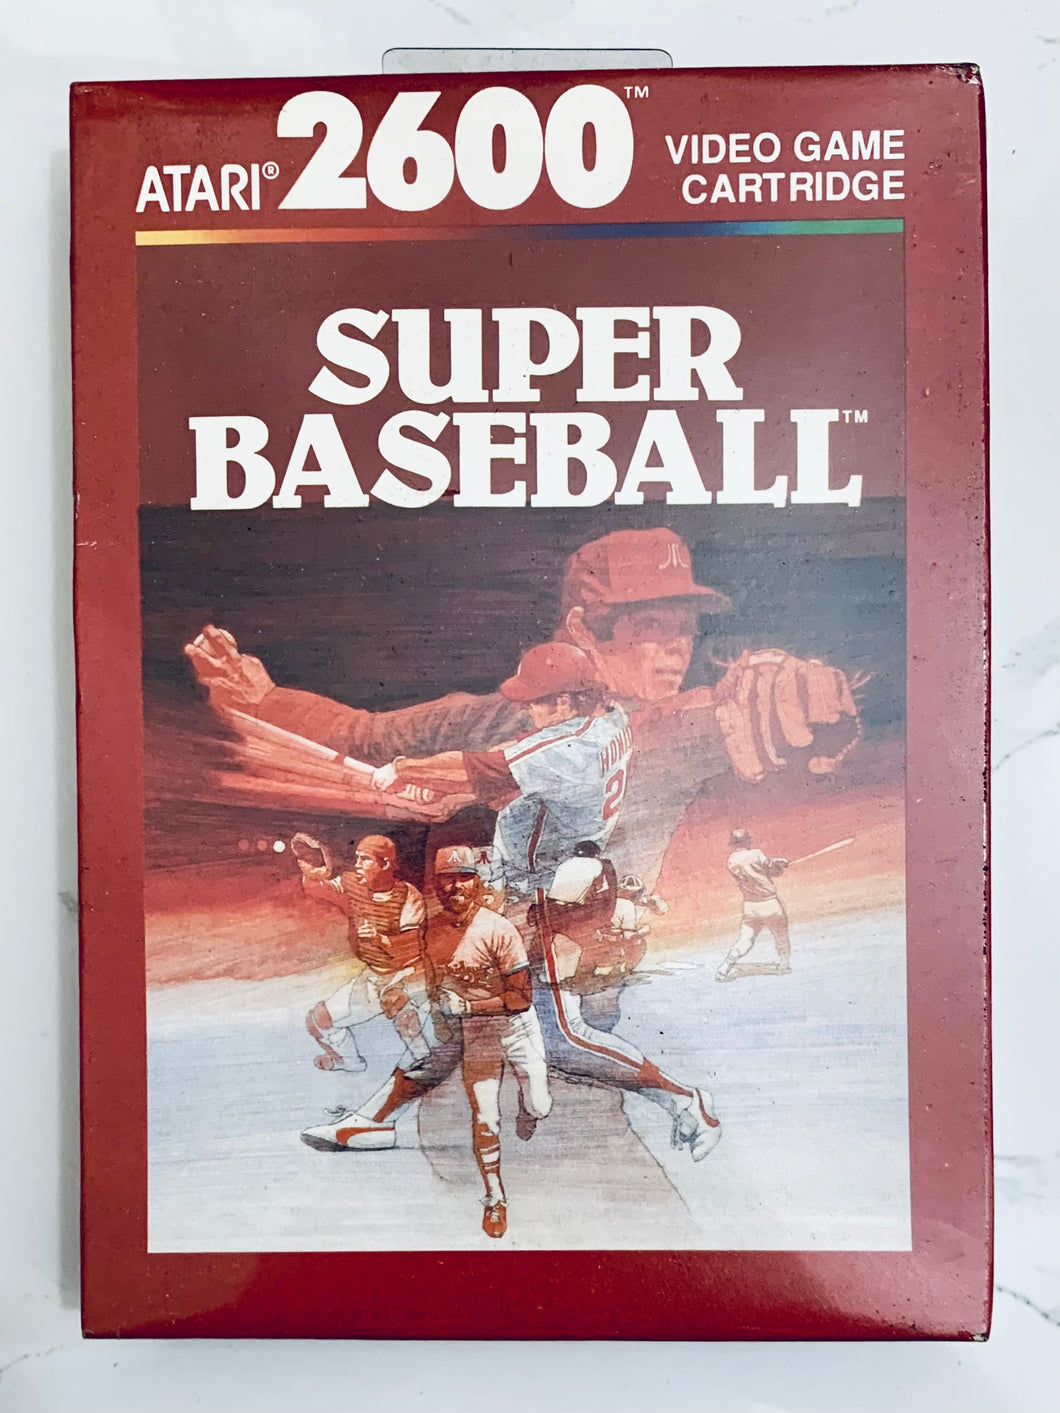 Super Baseball - Atari VCS 2600 - NTSC - Brand New